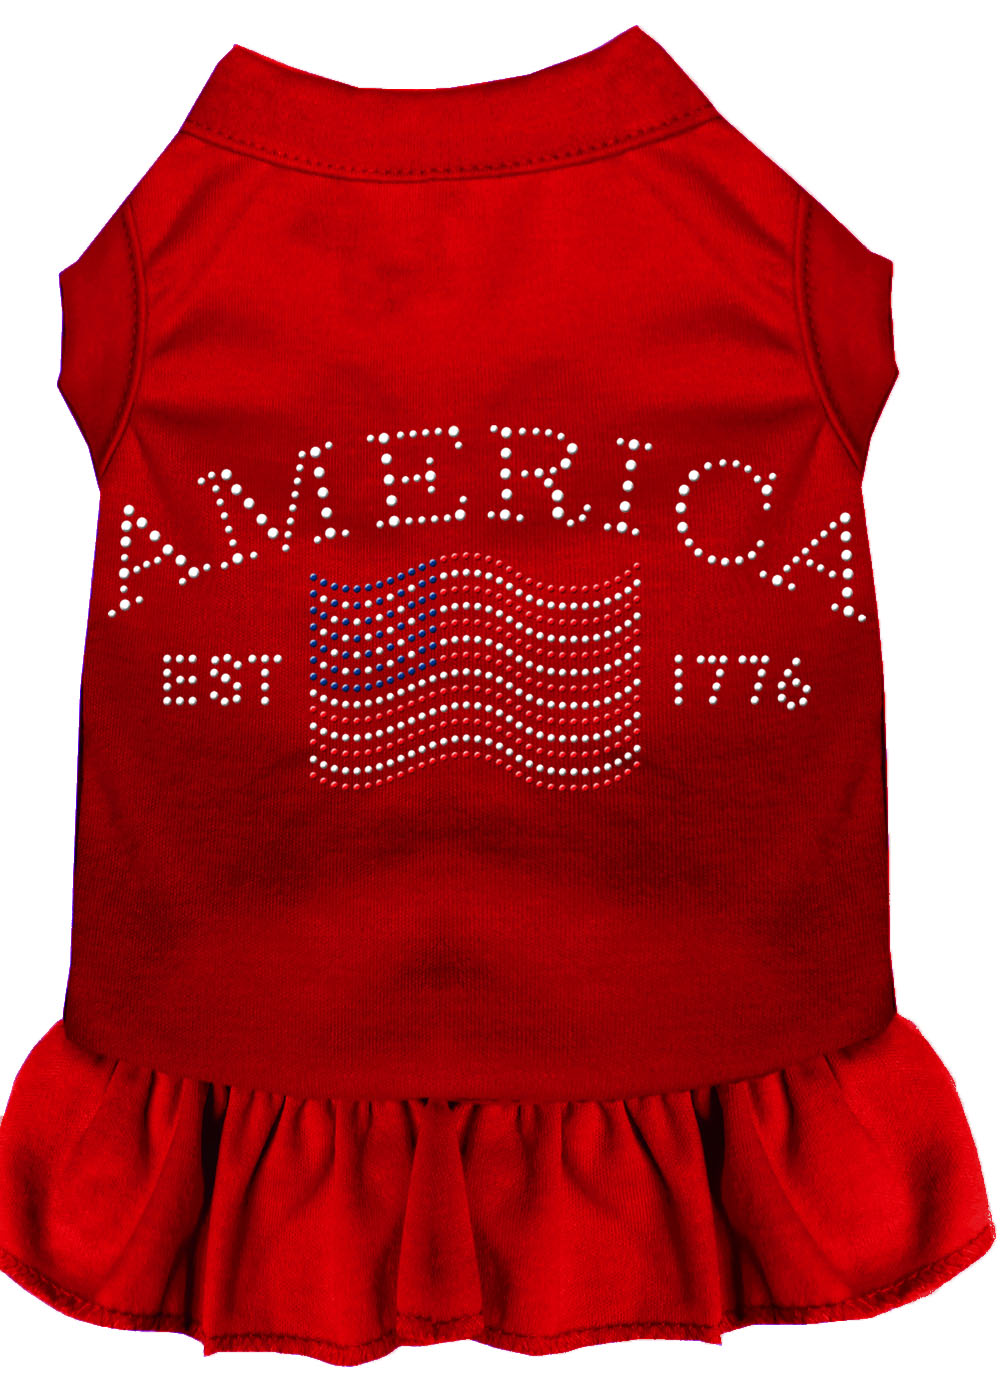 Classic America Rhinestone Dress Red XL